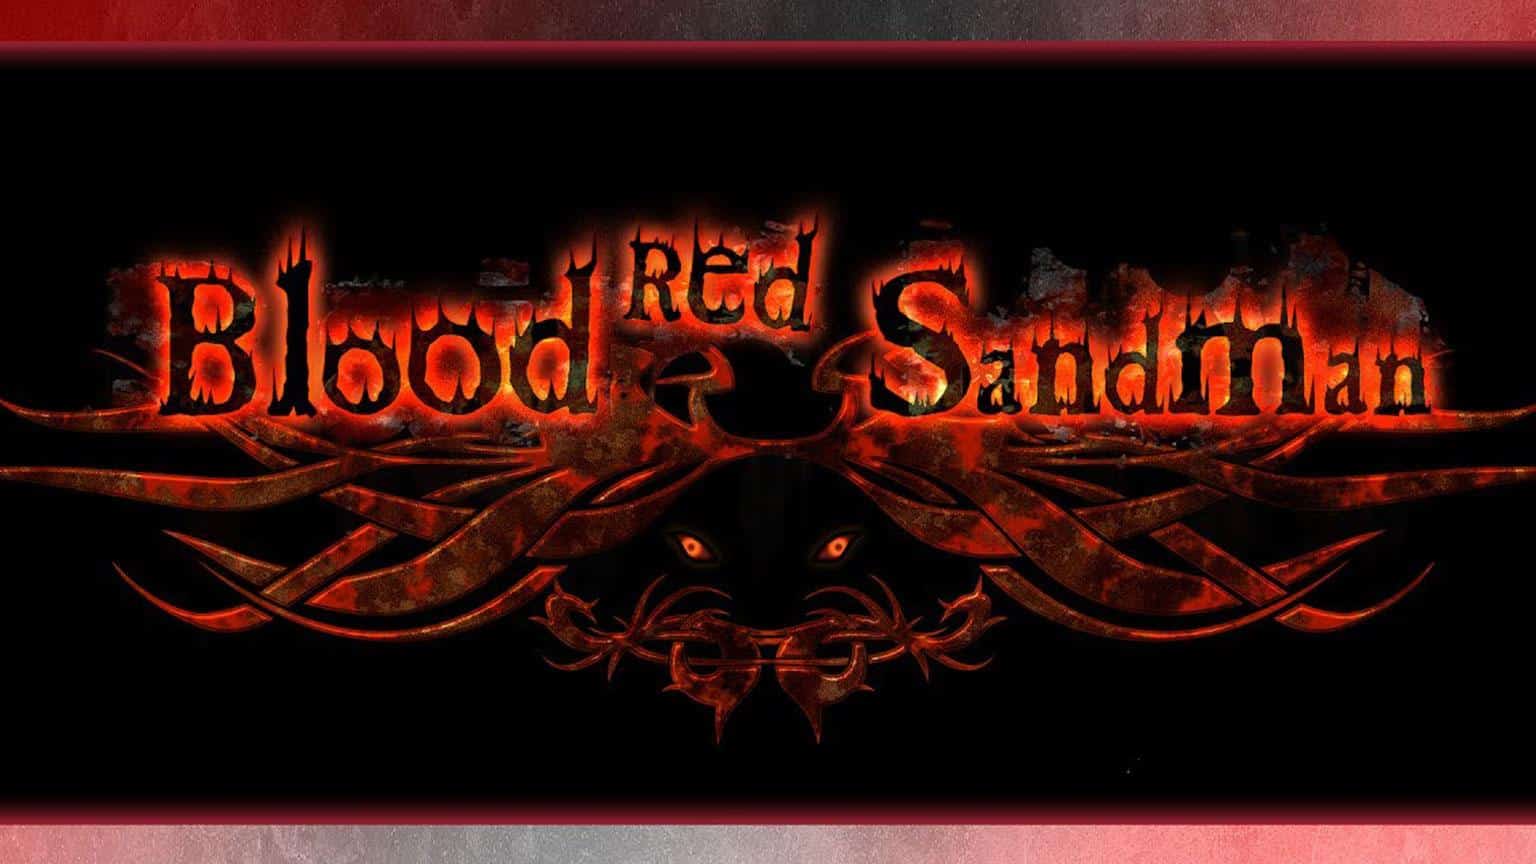 Blood red Sandman Hörspielkritik Artikelbild